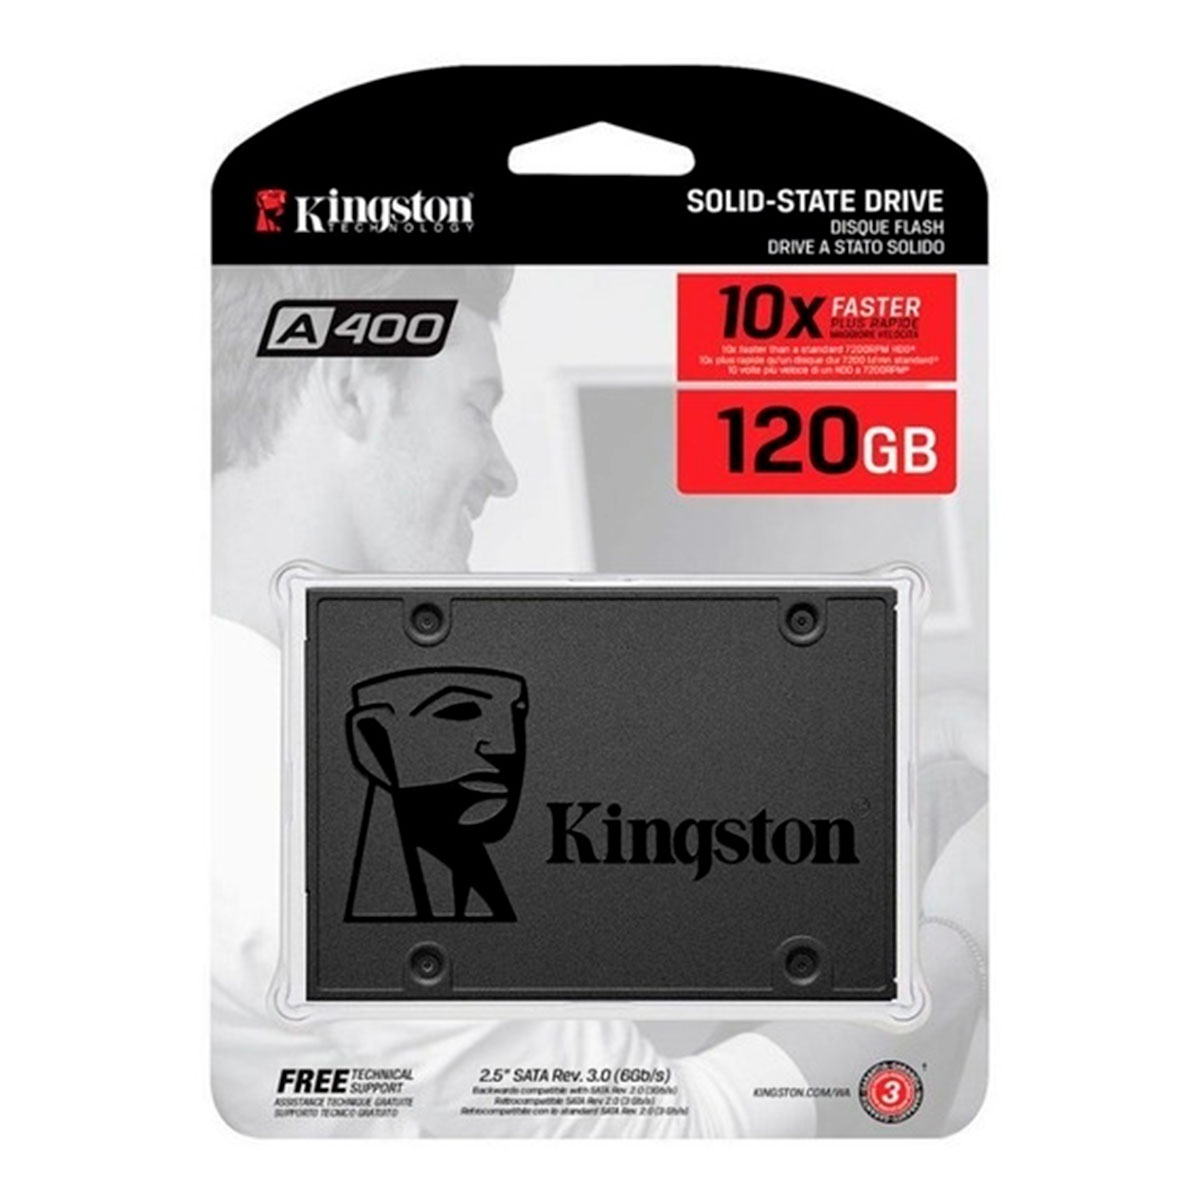 0410956 KINGSTON                                                     | DISCO SSD A400 120 GB SATA INTERNO 7 MM (1196)                                                                                                                                                                                                  